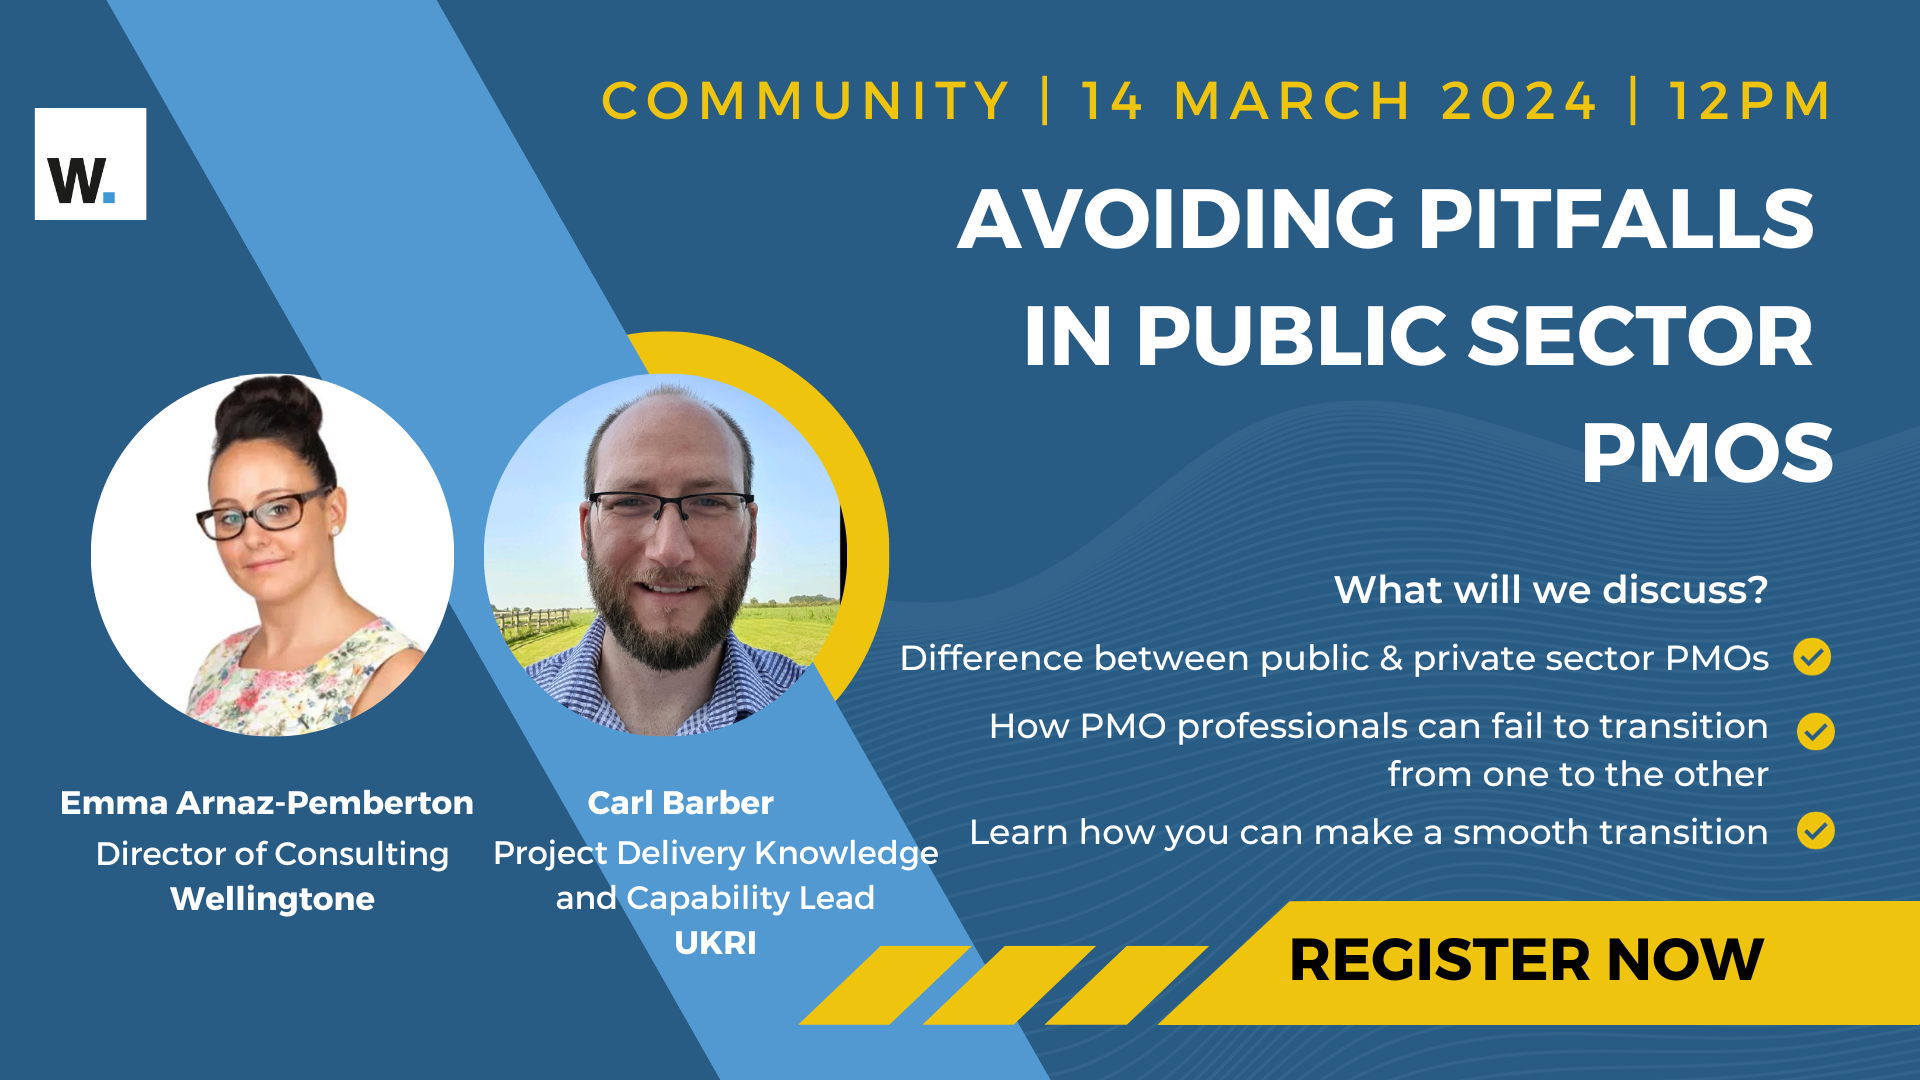 Community Event | Avoiding Pitfalls in Public Sector PMOs